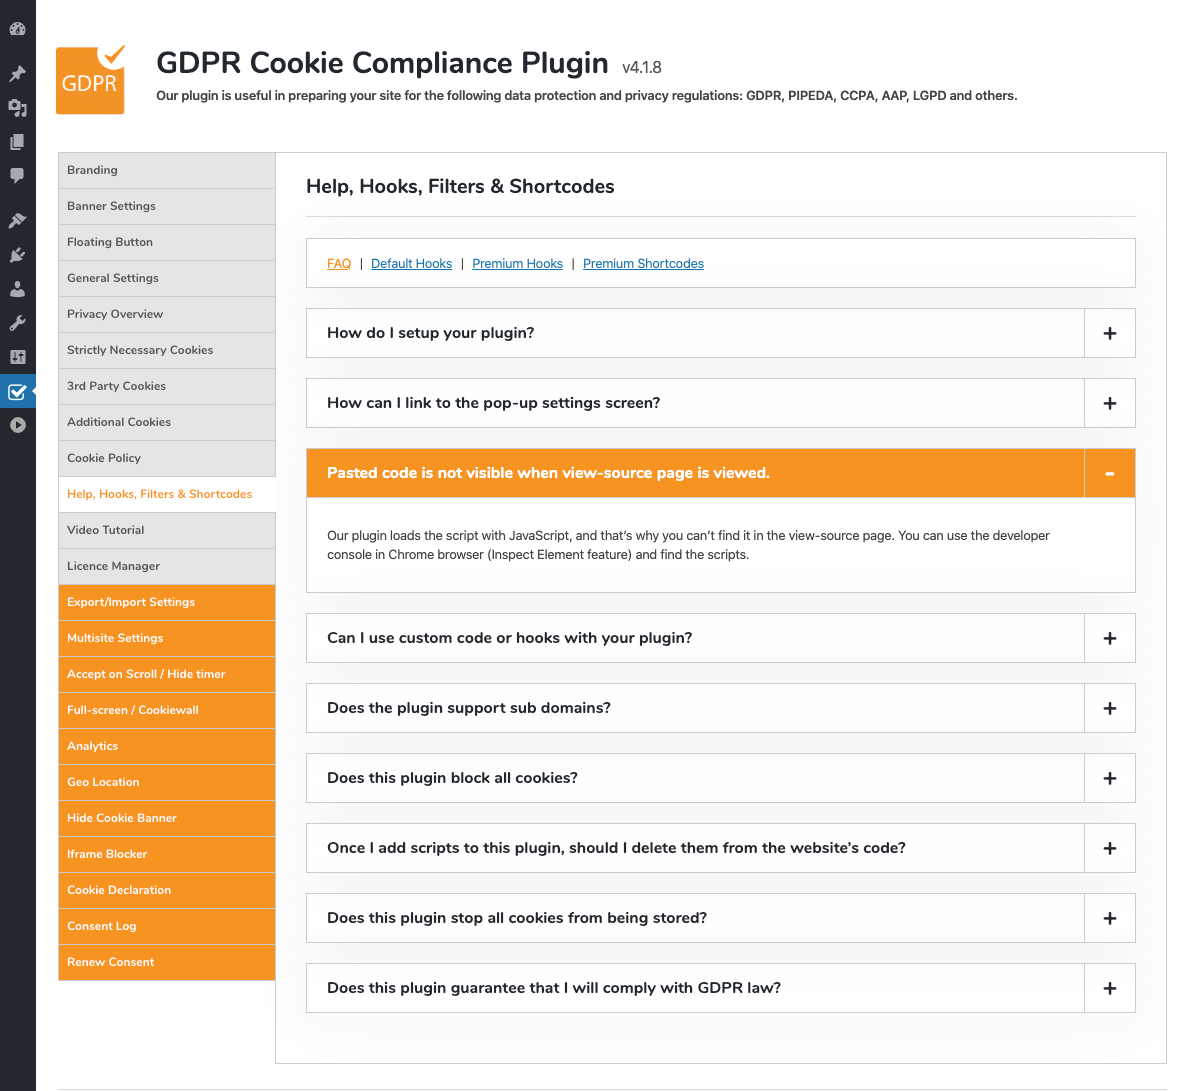 GDPR Cookie Compliance - Admin - Help - FAQ